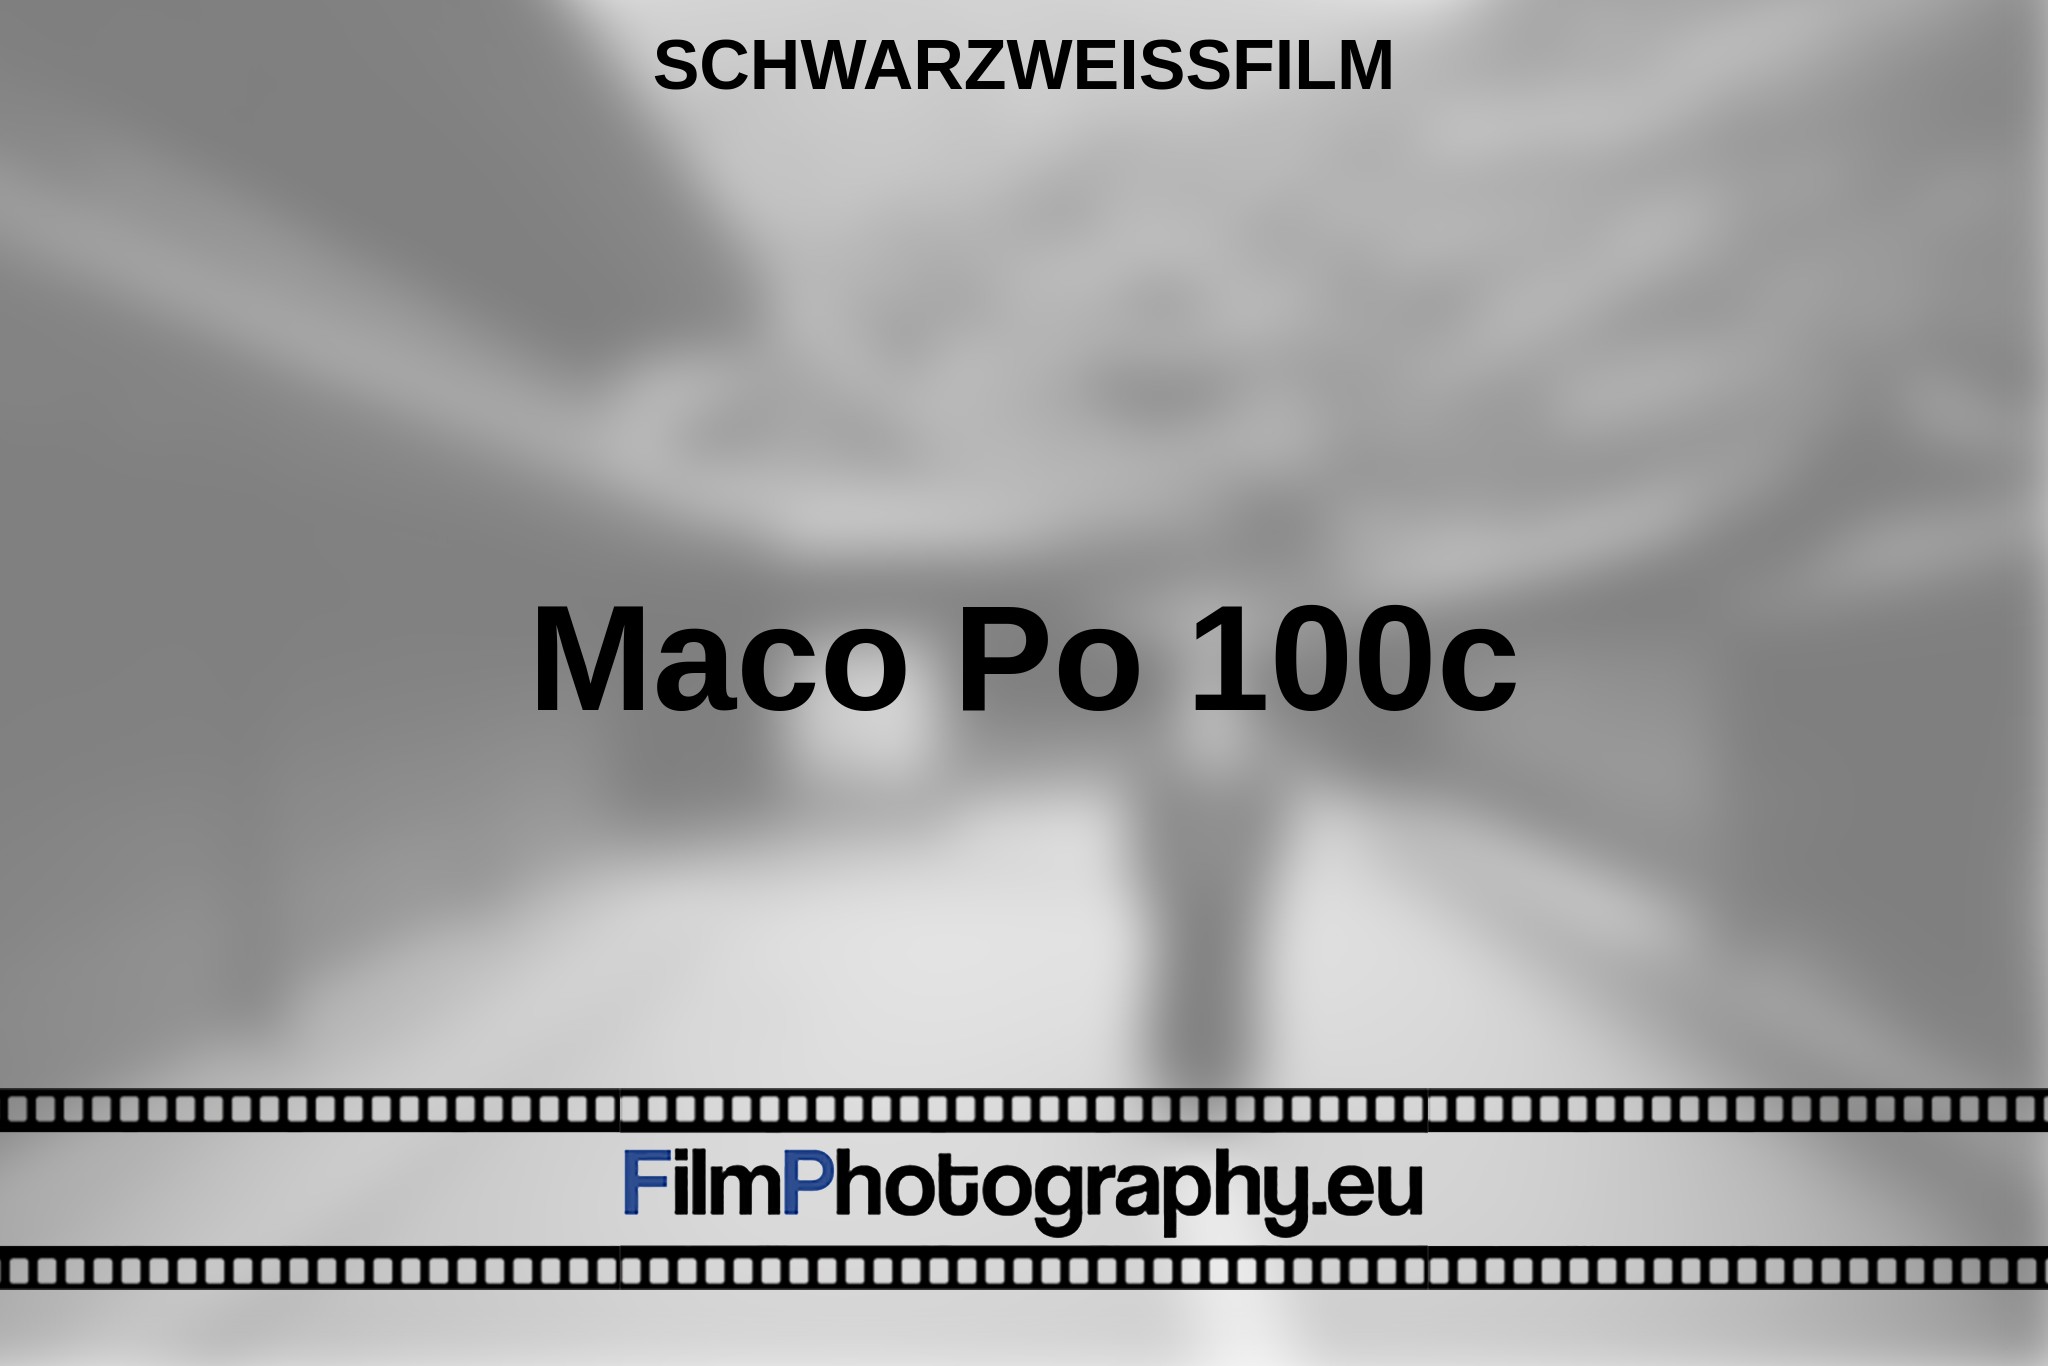 maco-po-100c-schwarzweißfilm-bnv.jpg